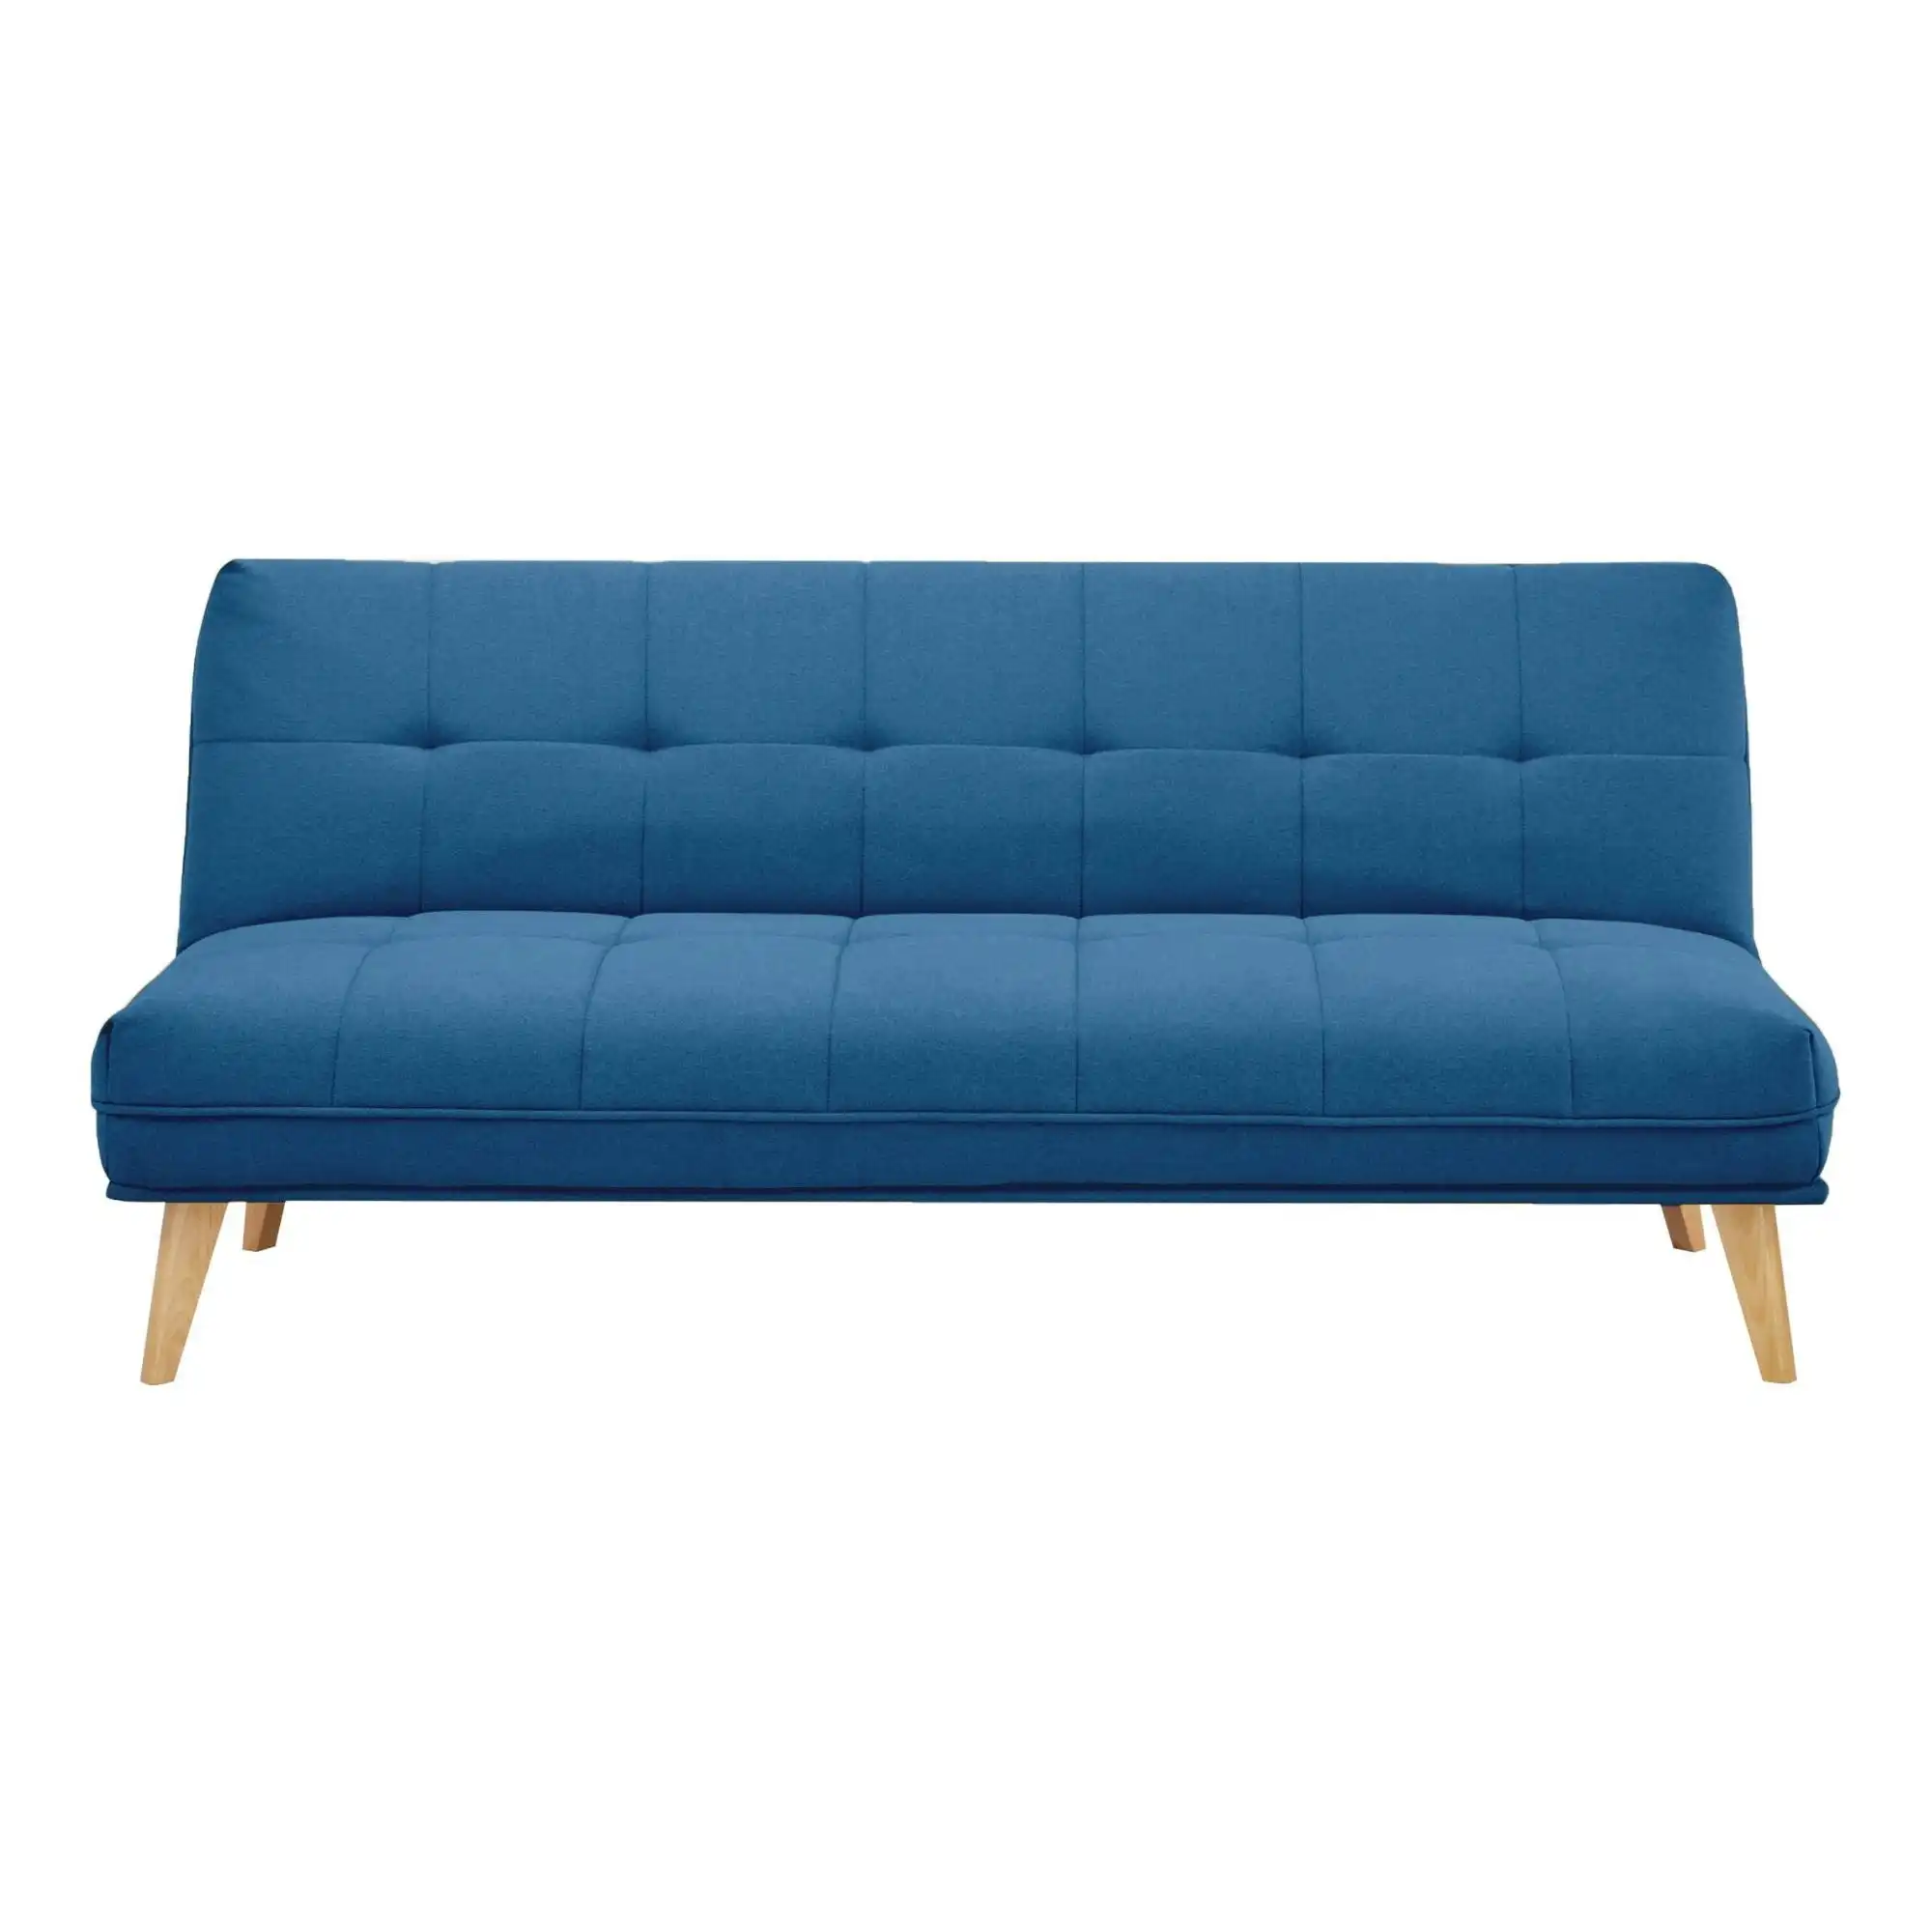 Jovie 3 Seater Fabric Sofa Bed